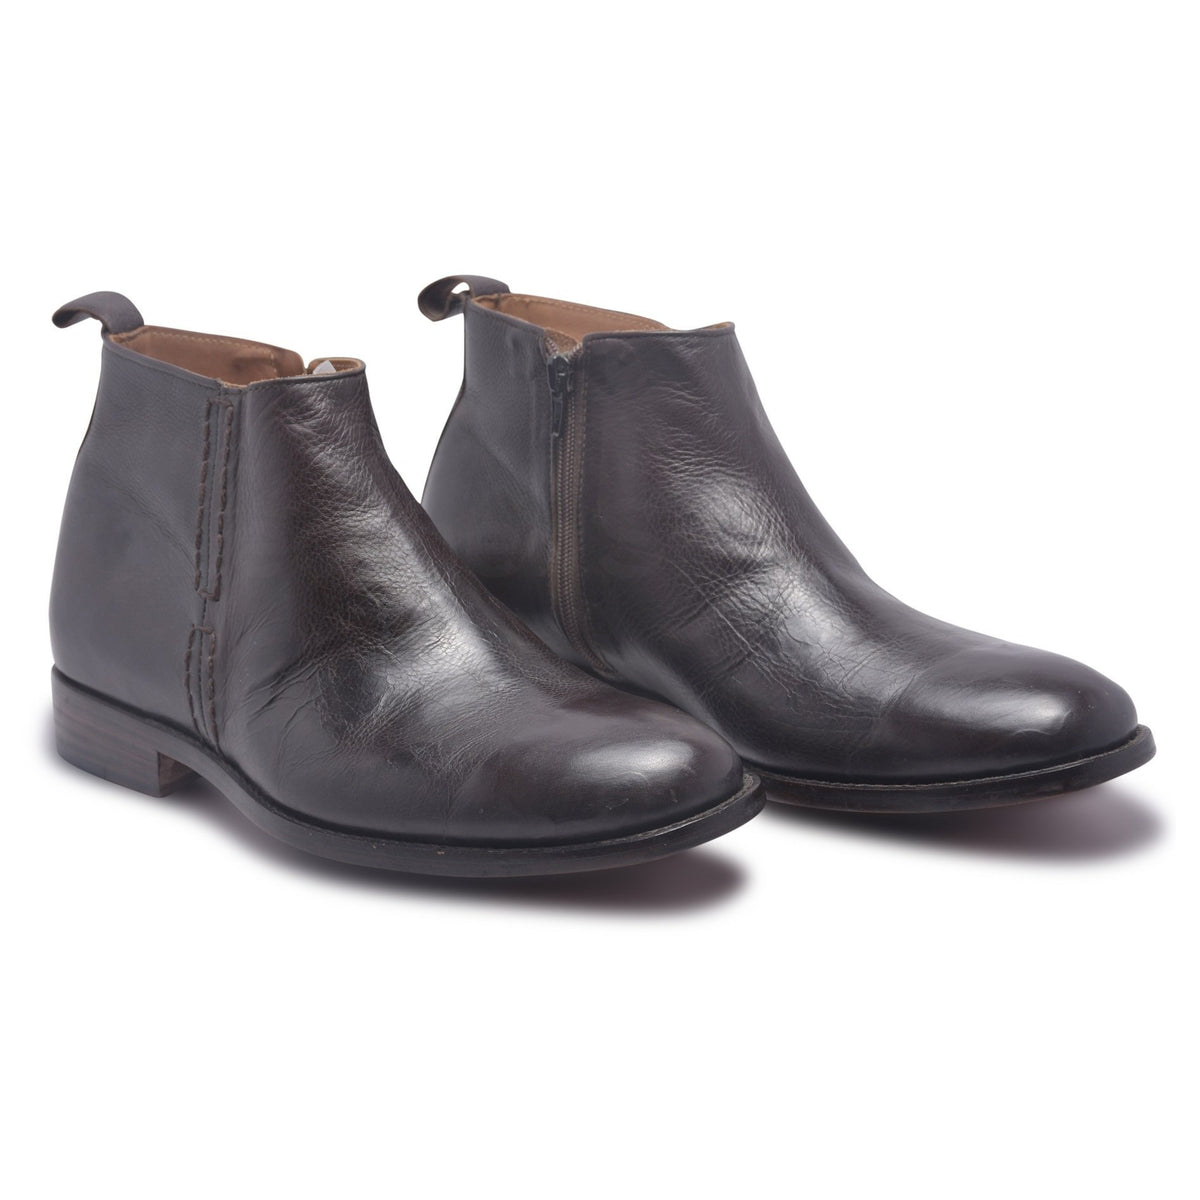 Mens Suede Boots With Zipper Flash Sales | bellvalefarms.com